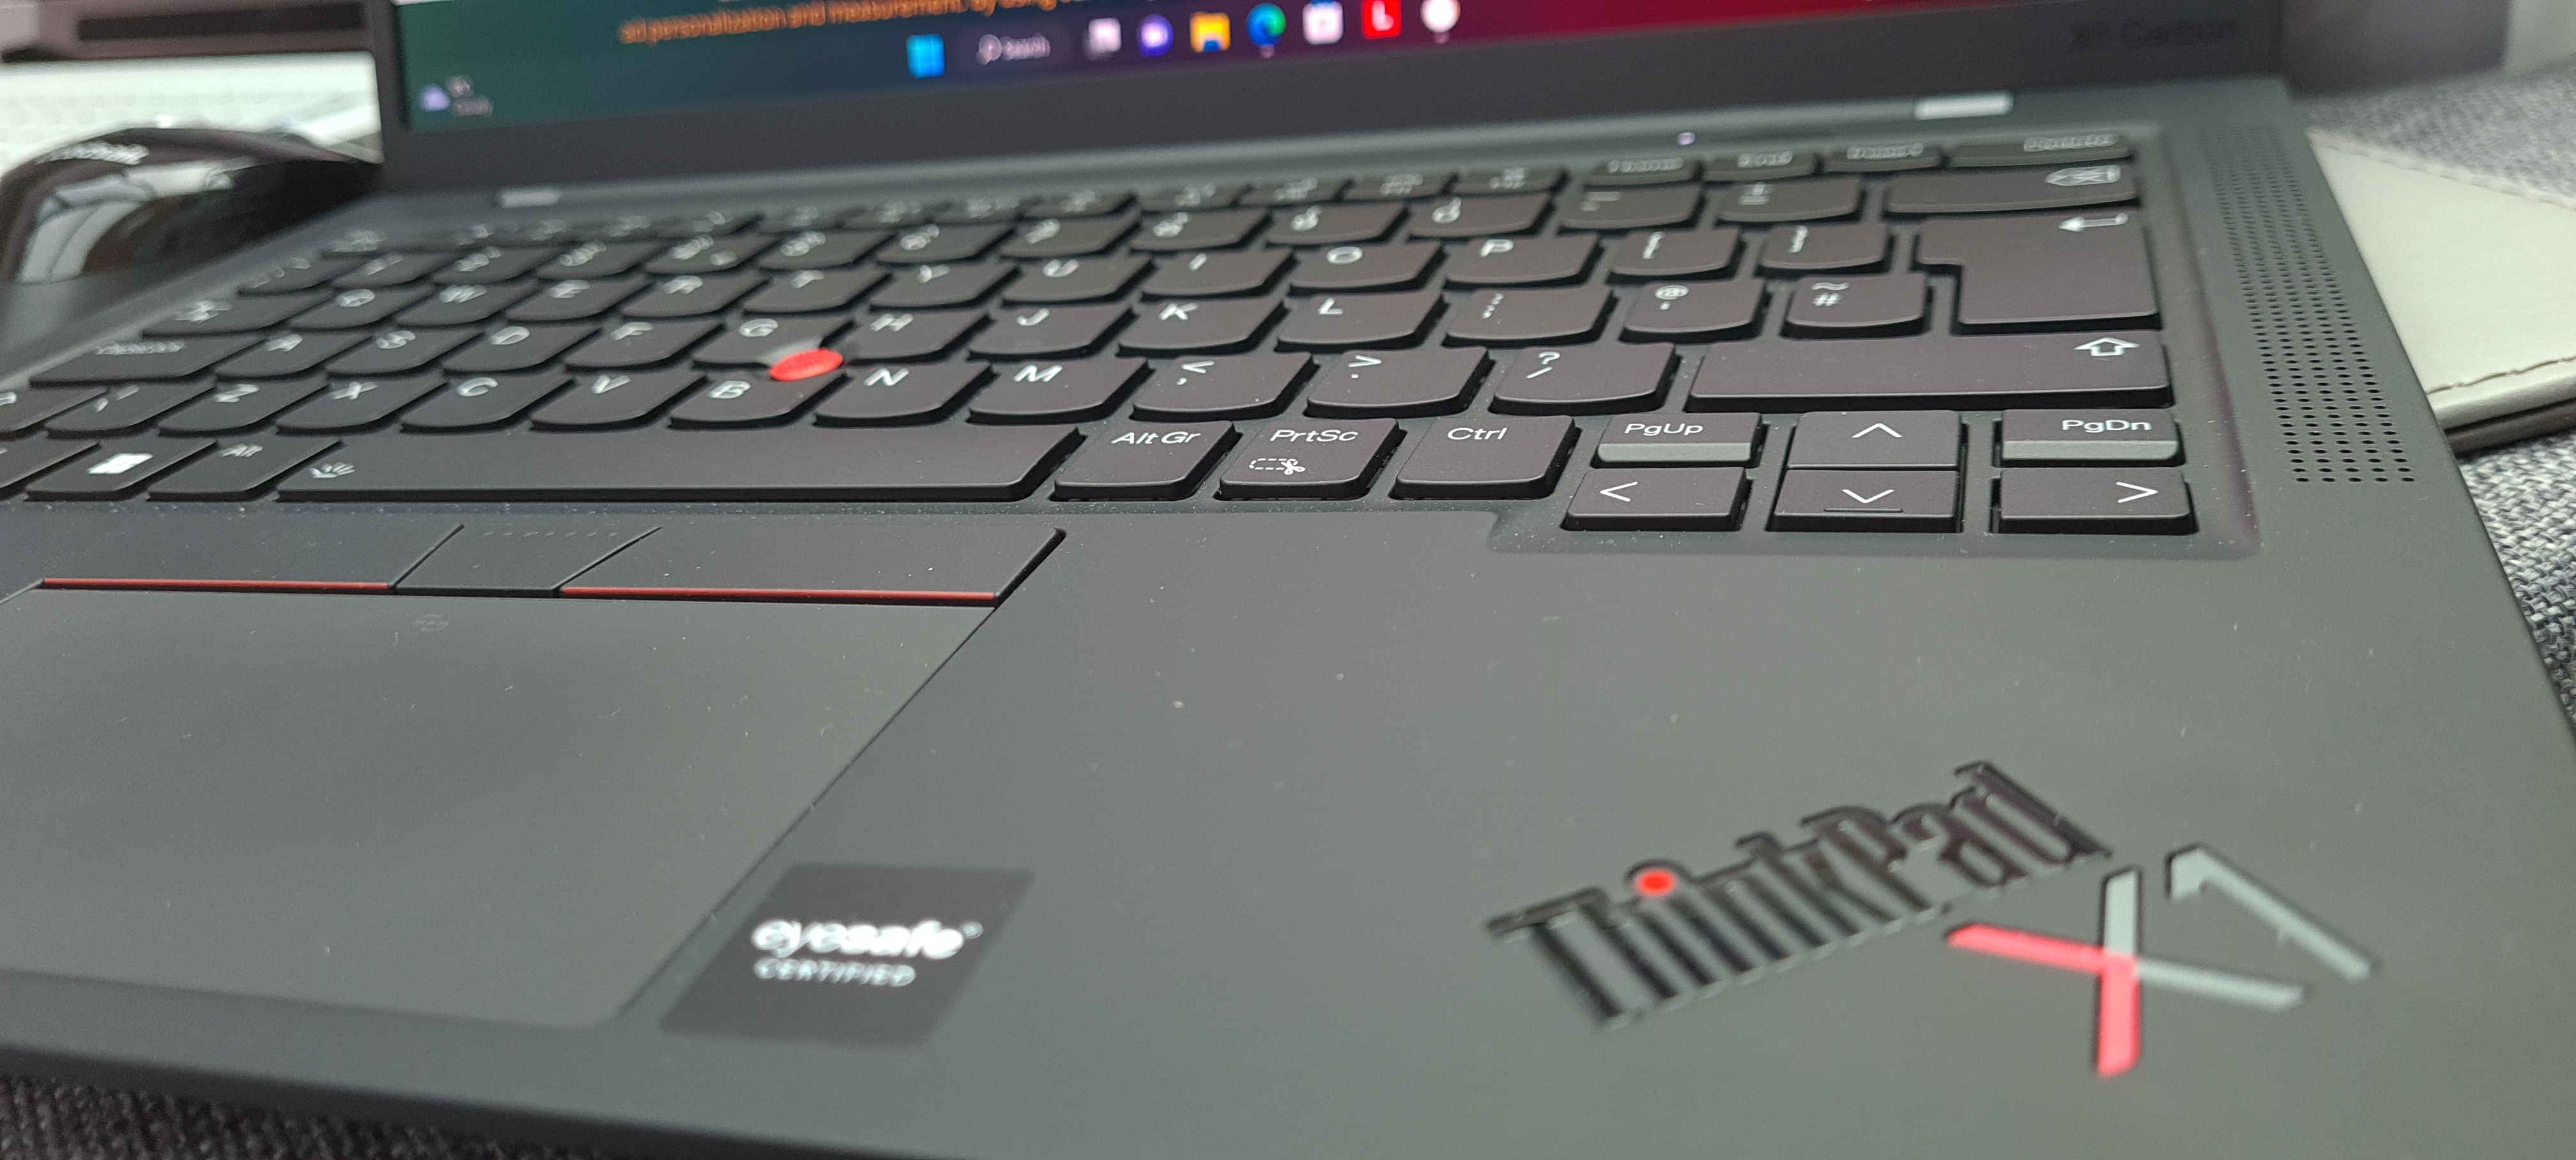 Lenovo ThinkPad X1 Carbon Gen 10 Review: Sleek And Premium